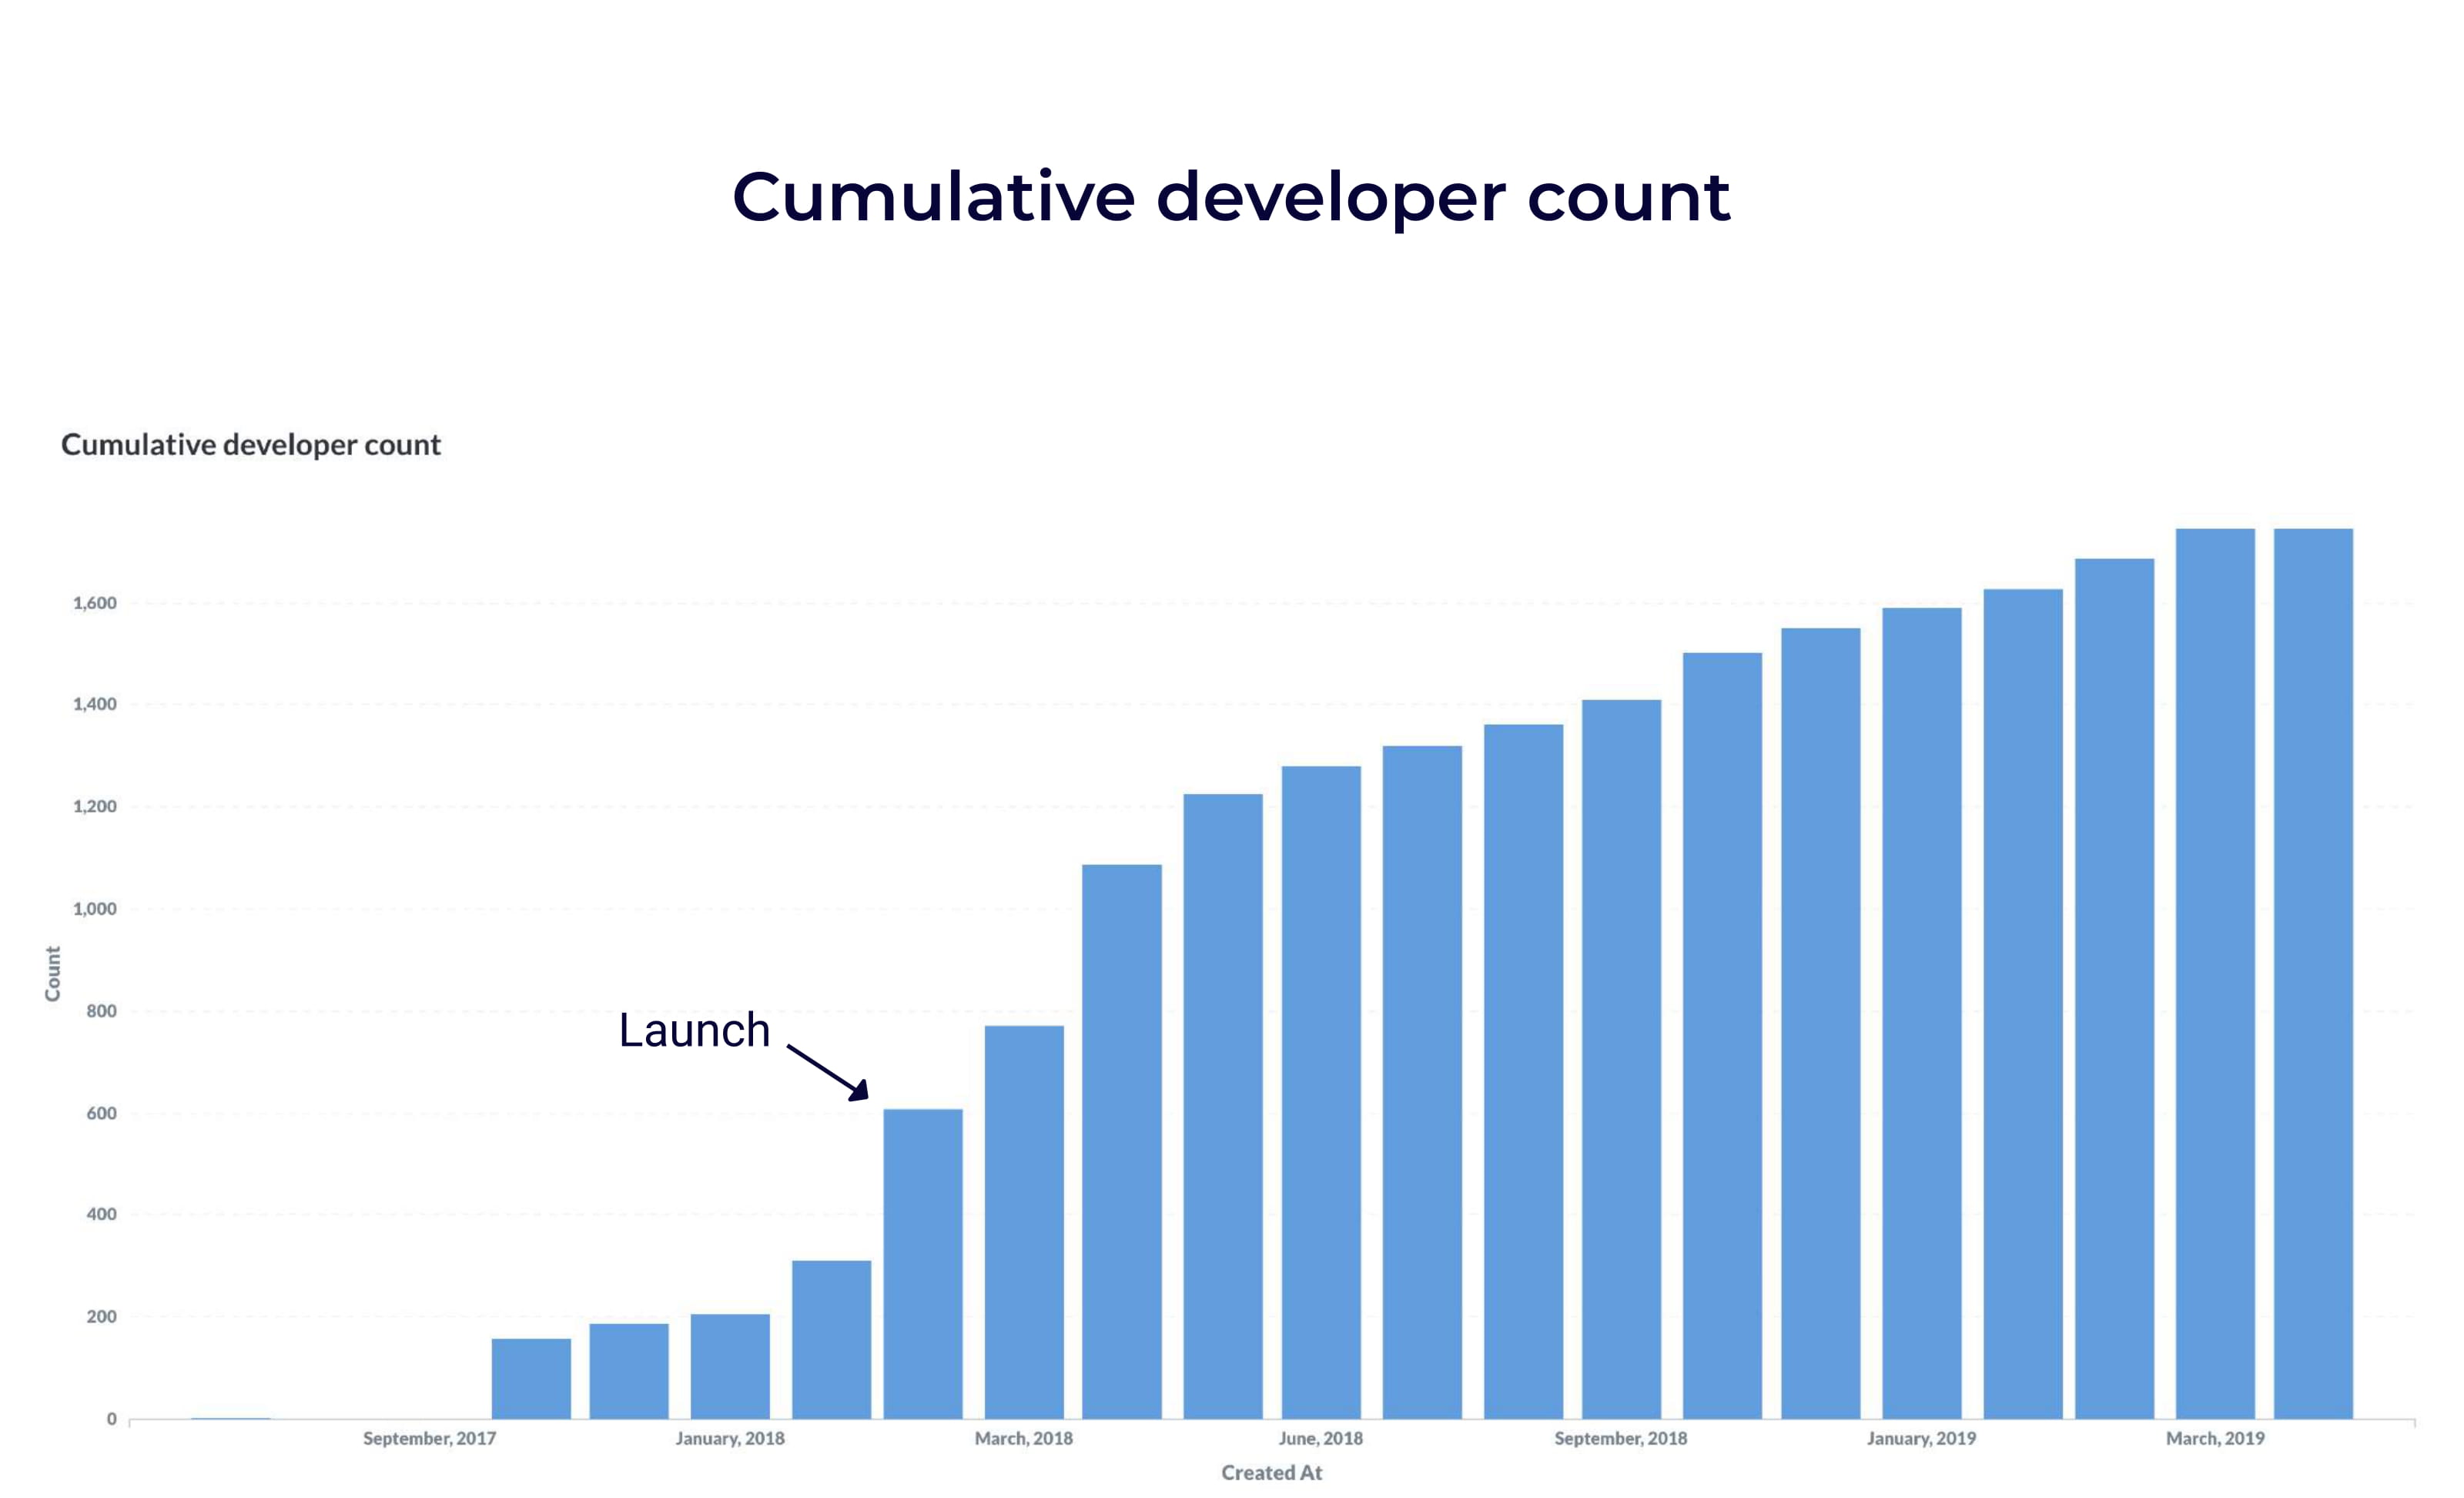 Moonlight cumulative developer count